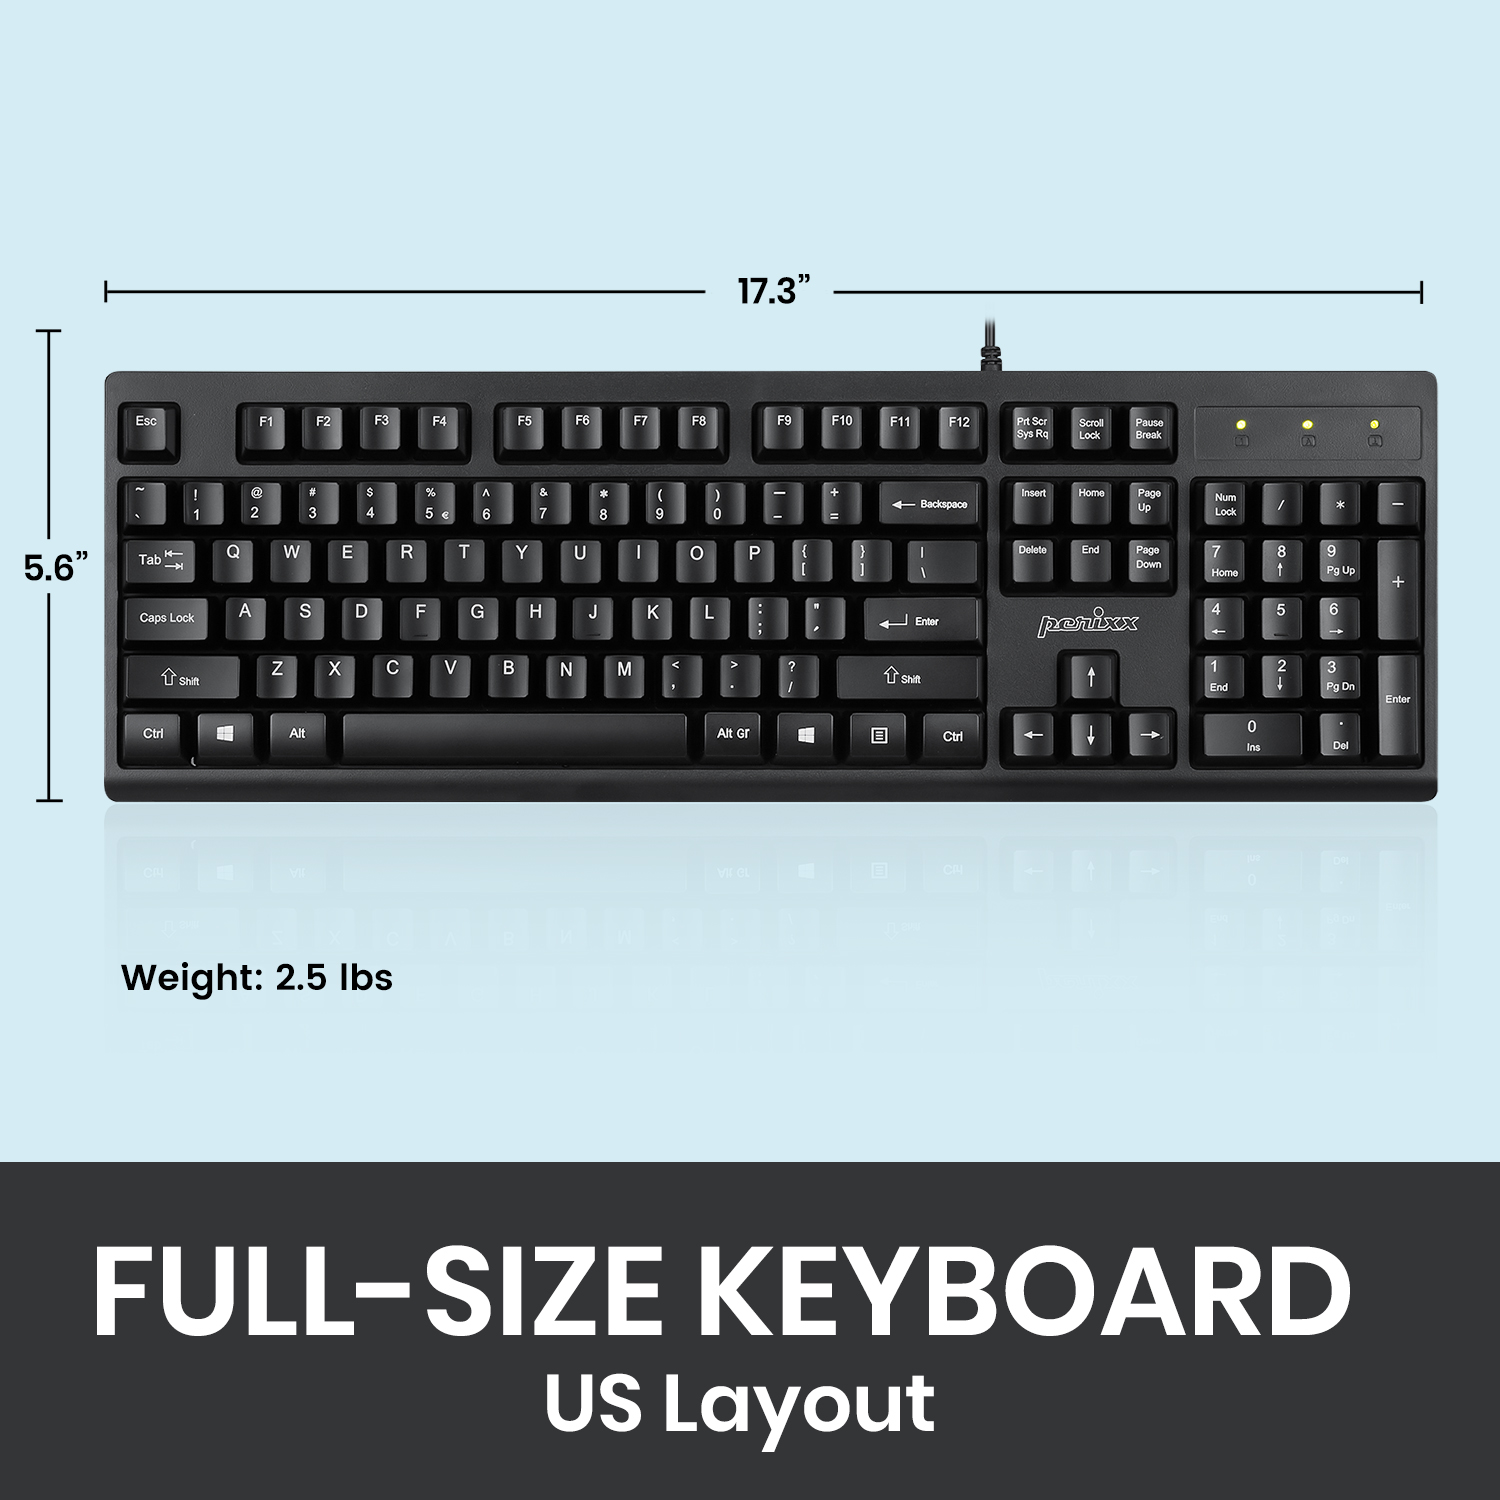  Full-size Keyboard